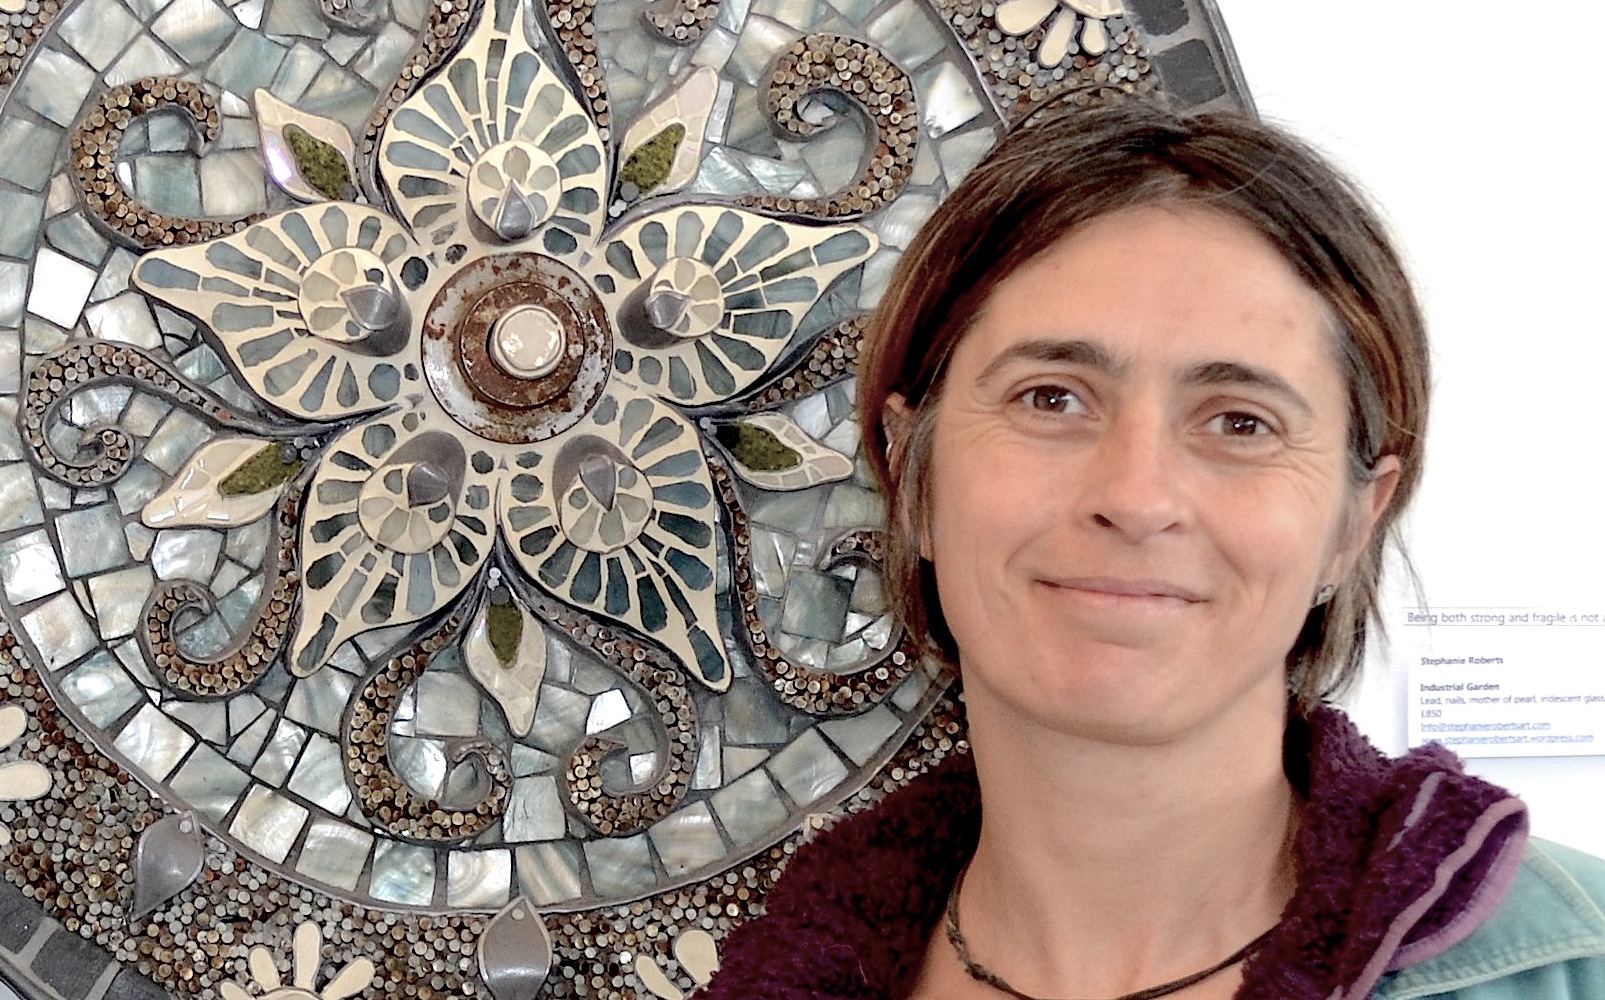 artist with her mosaic work